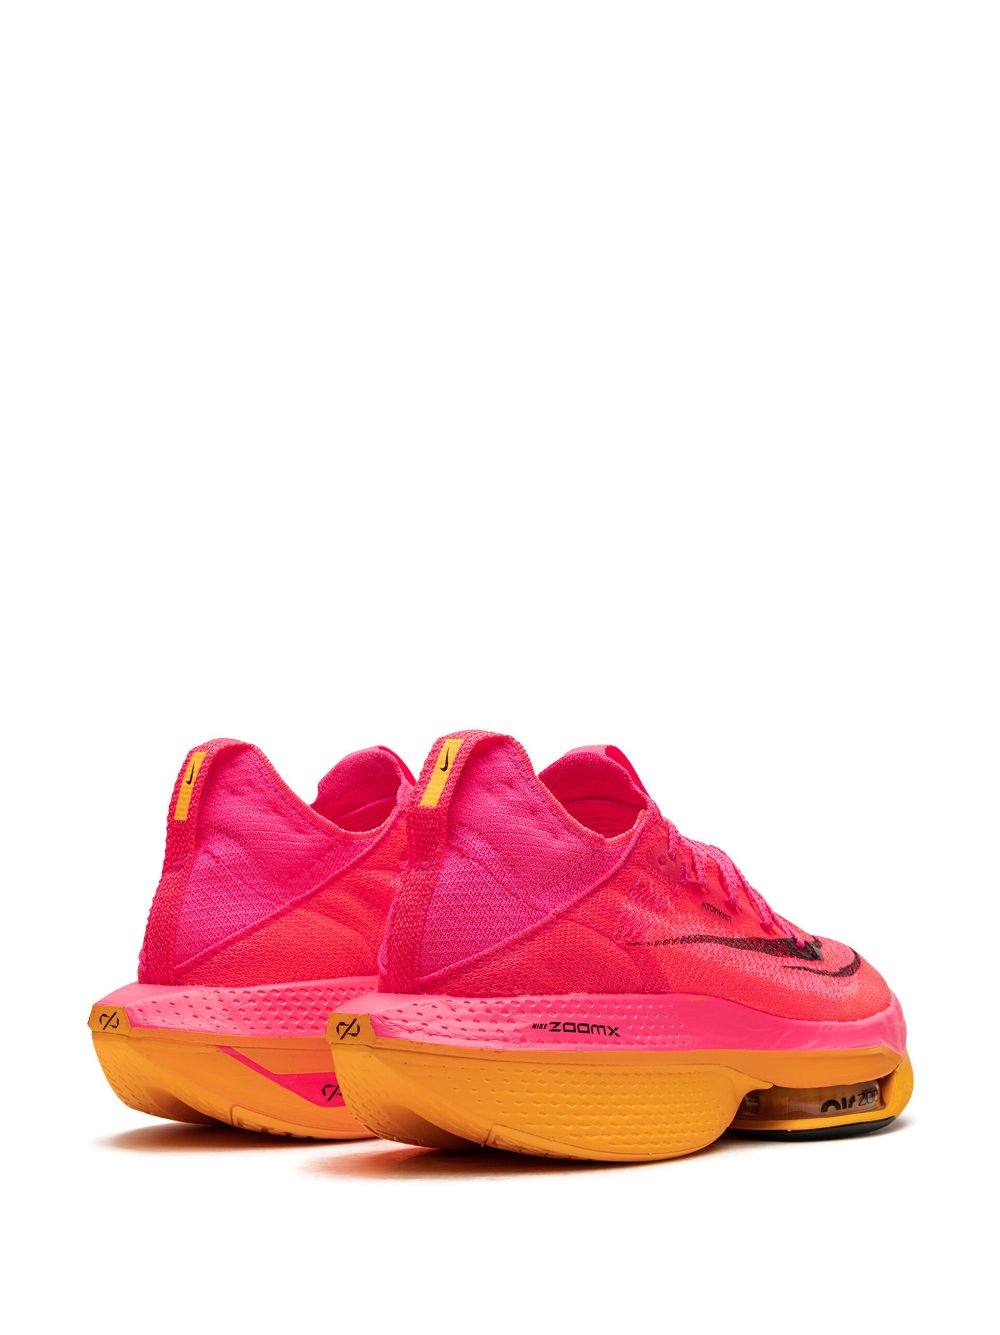 Air Zoom Alphafly Next% 2 "Hyper Pink/Laser Orange" sneakers - 3